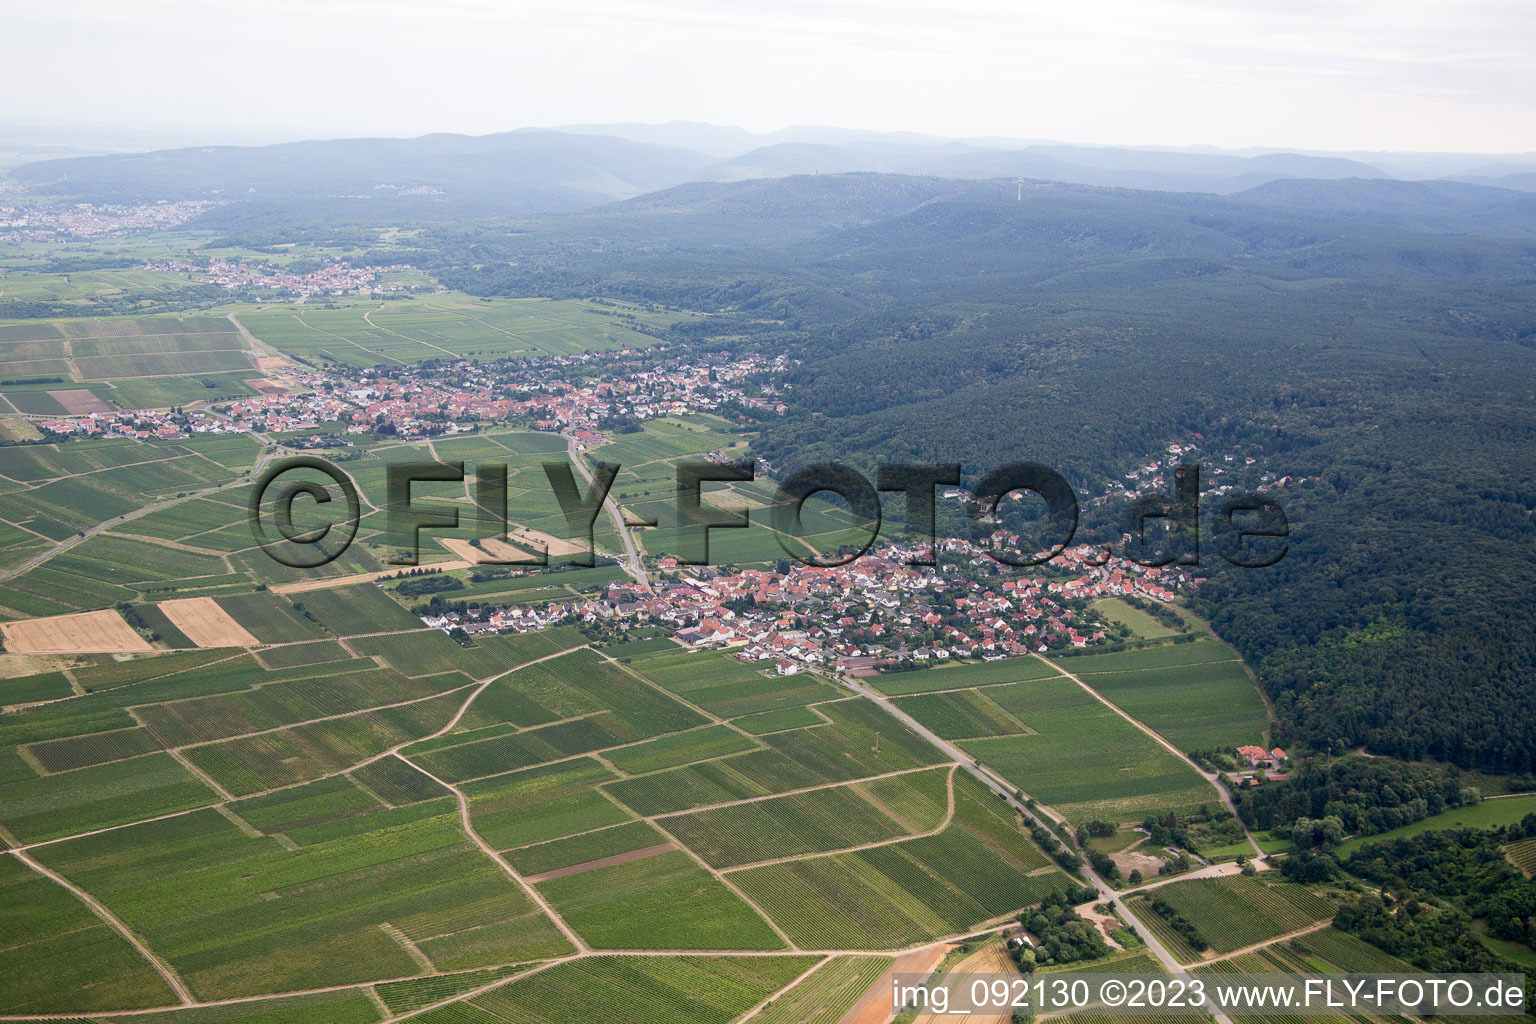 Aerial view of Bobenheim am Berg in the state Rhineland-Palatinate, Germany